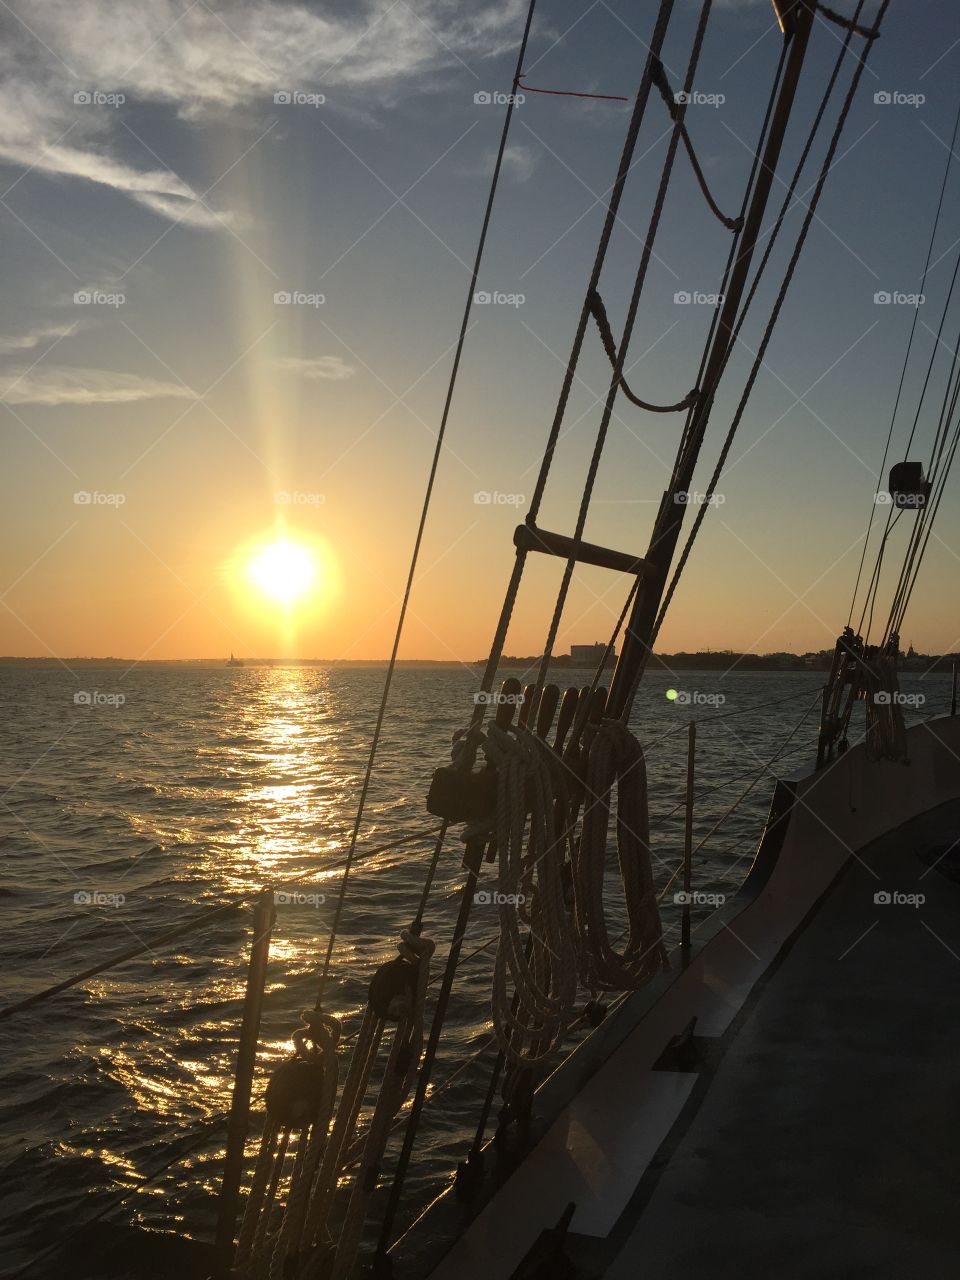 Sailing in Charleston Harbor